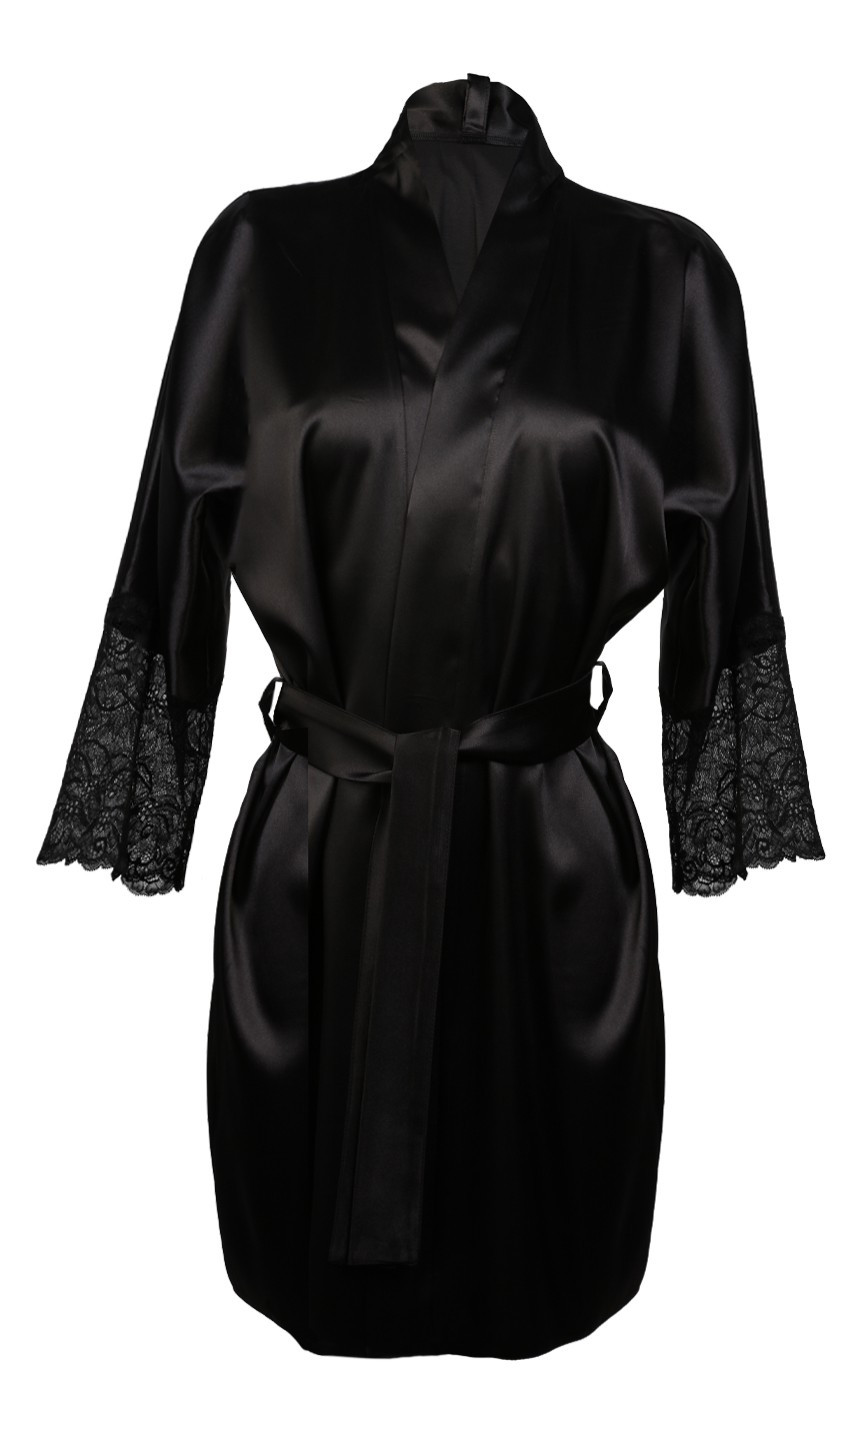 Dámský župan Housecoat model 16664236 Black M černá - DKaren